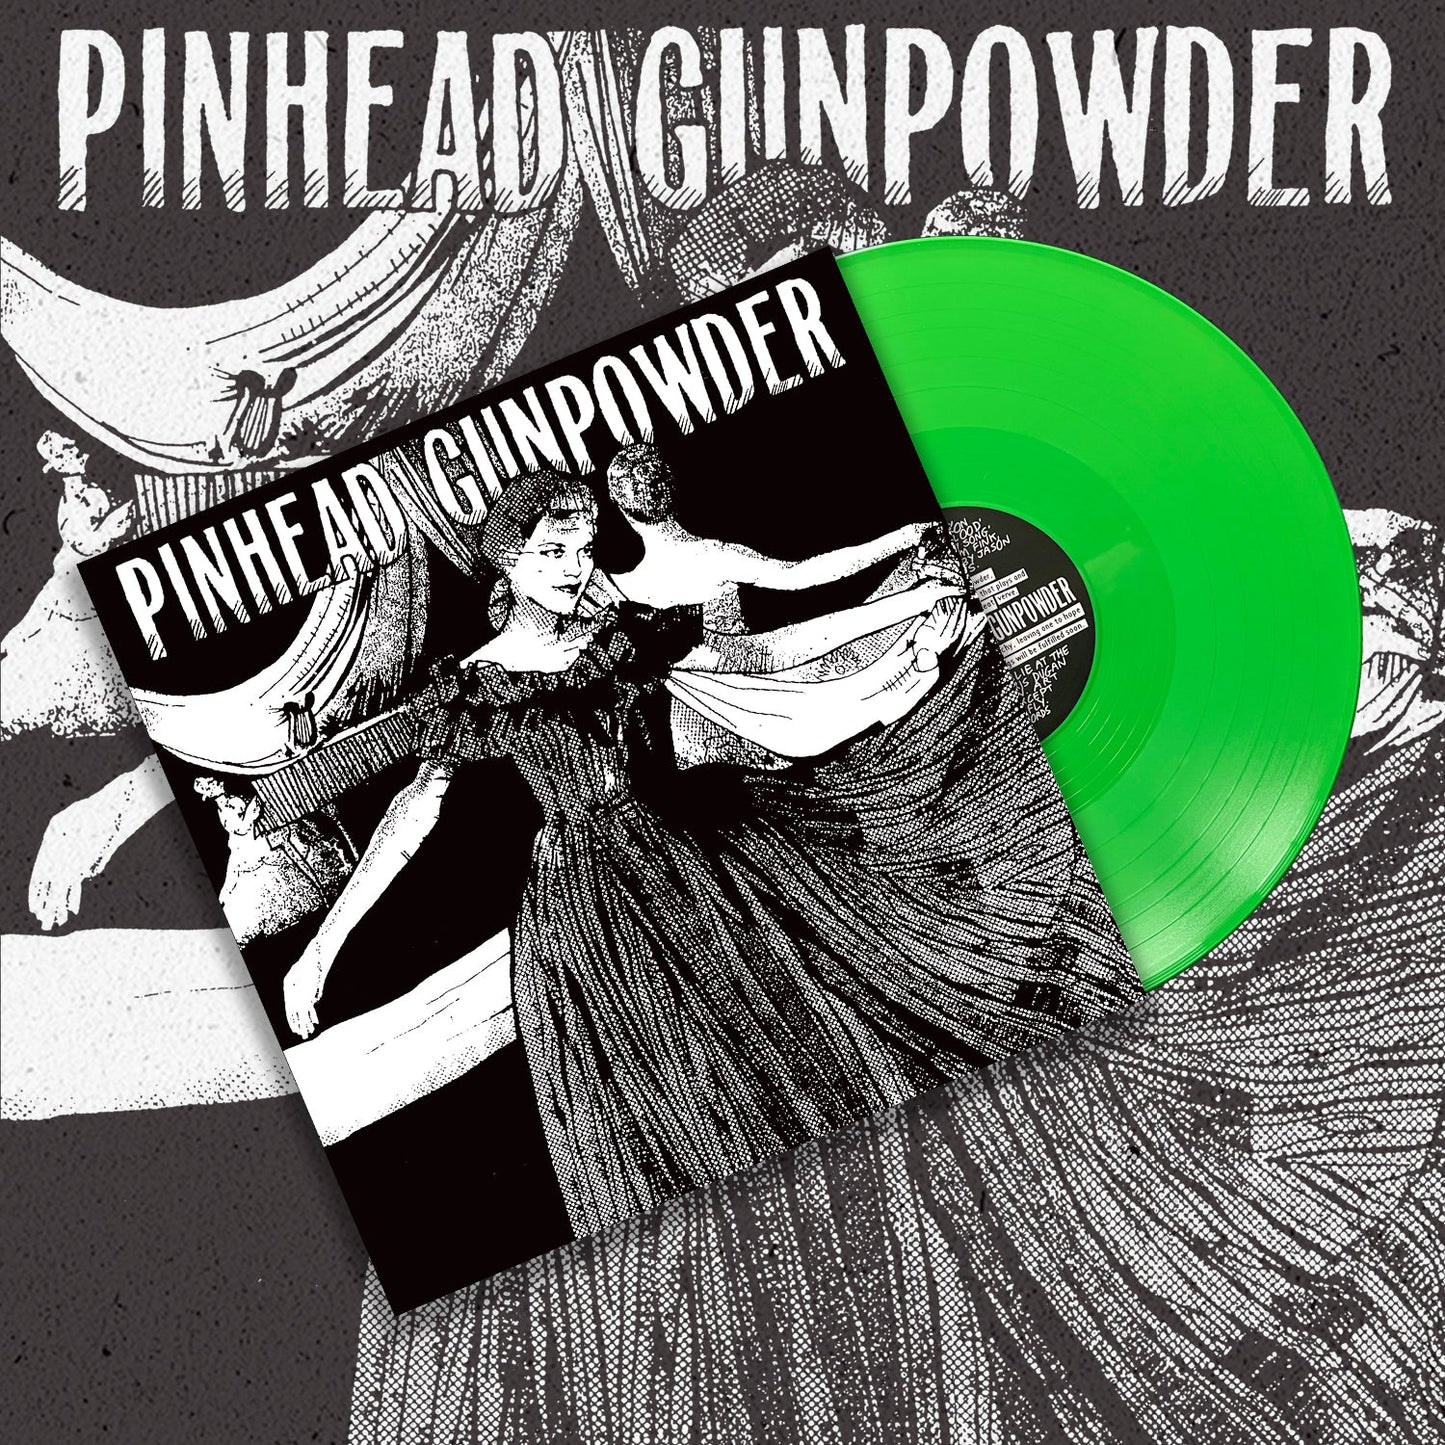 DAMAGED: Pinhead Gunpowder "Compulsive Disclosure" LP (w/ BONUS TRACKS)